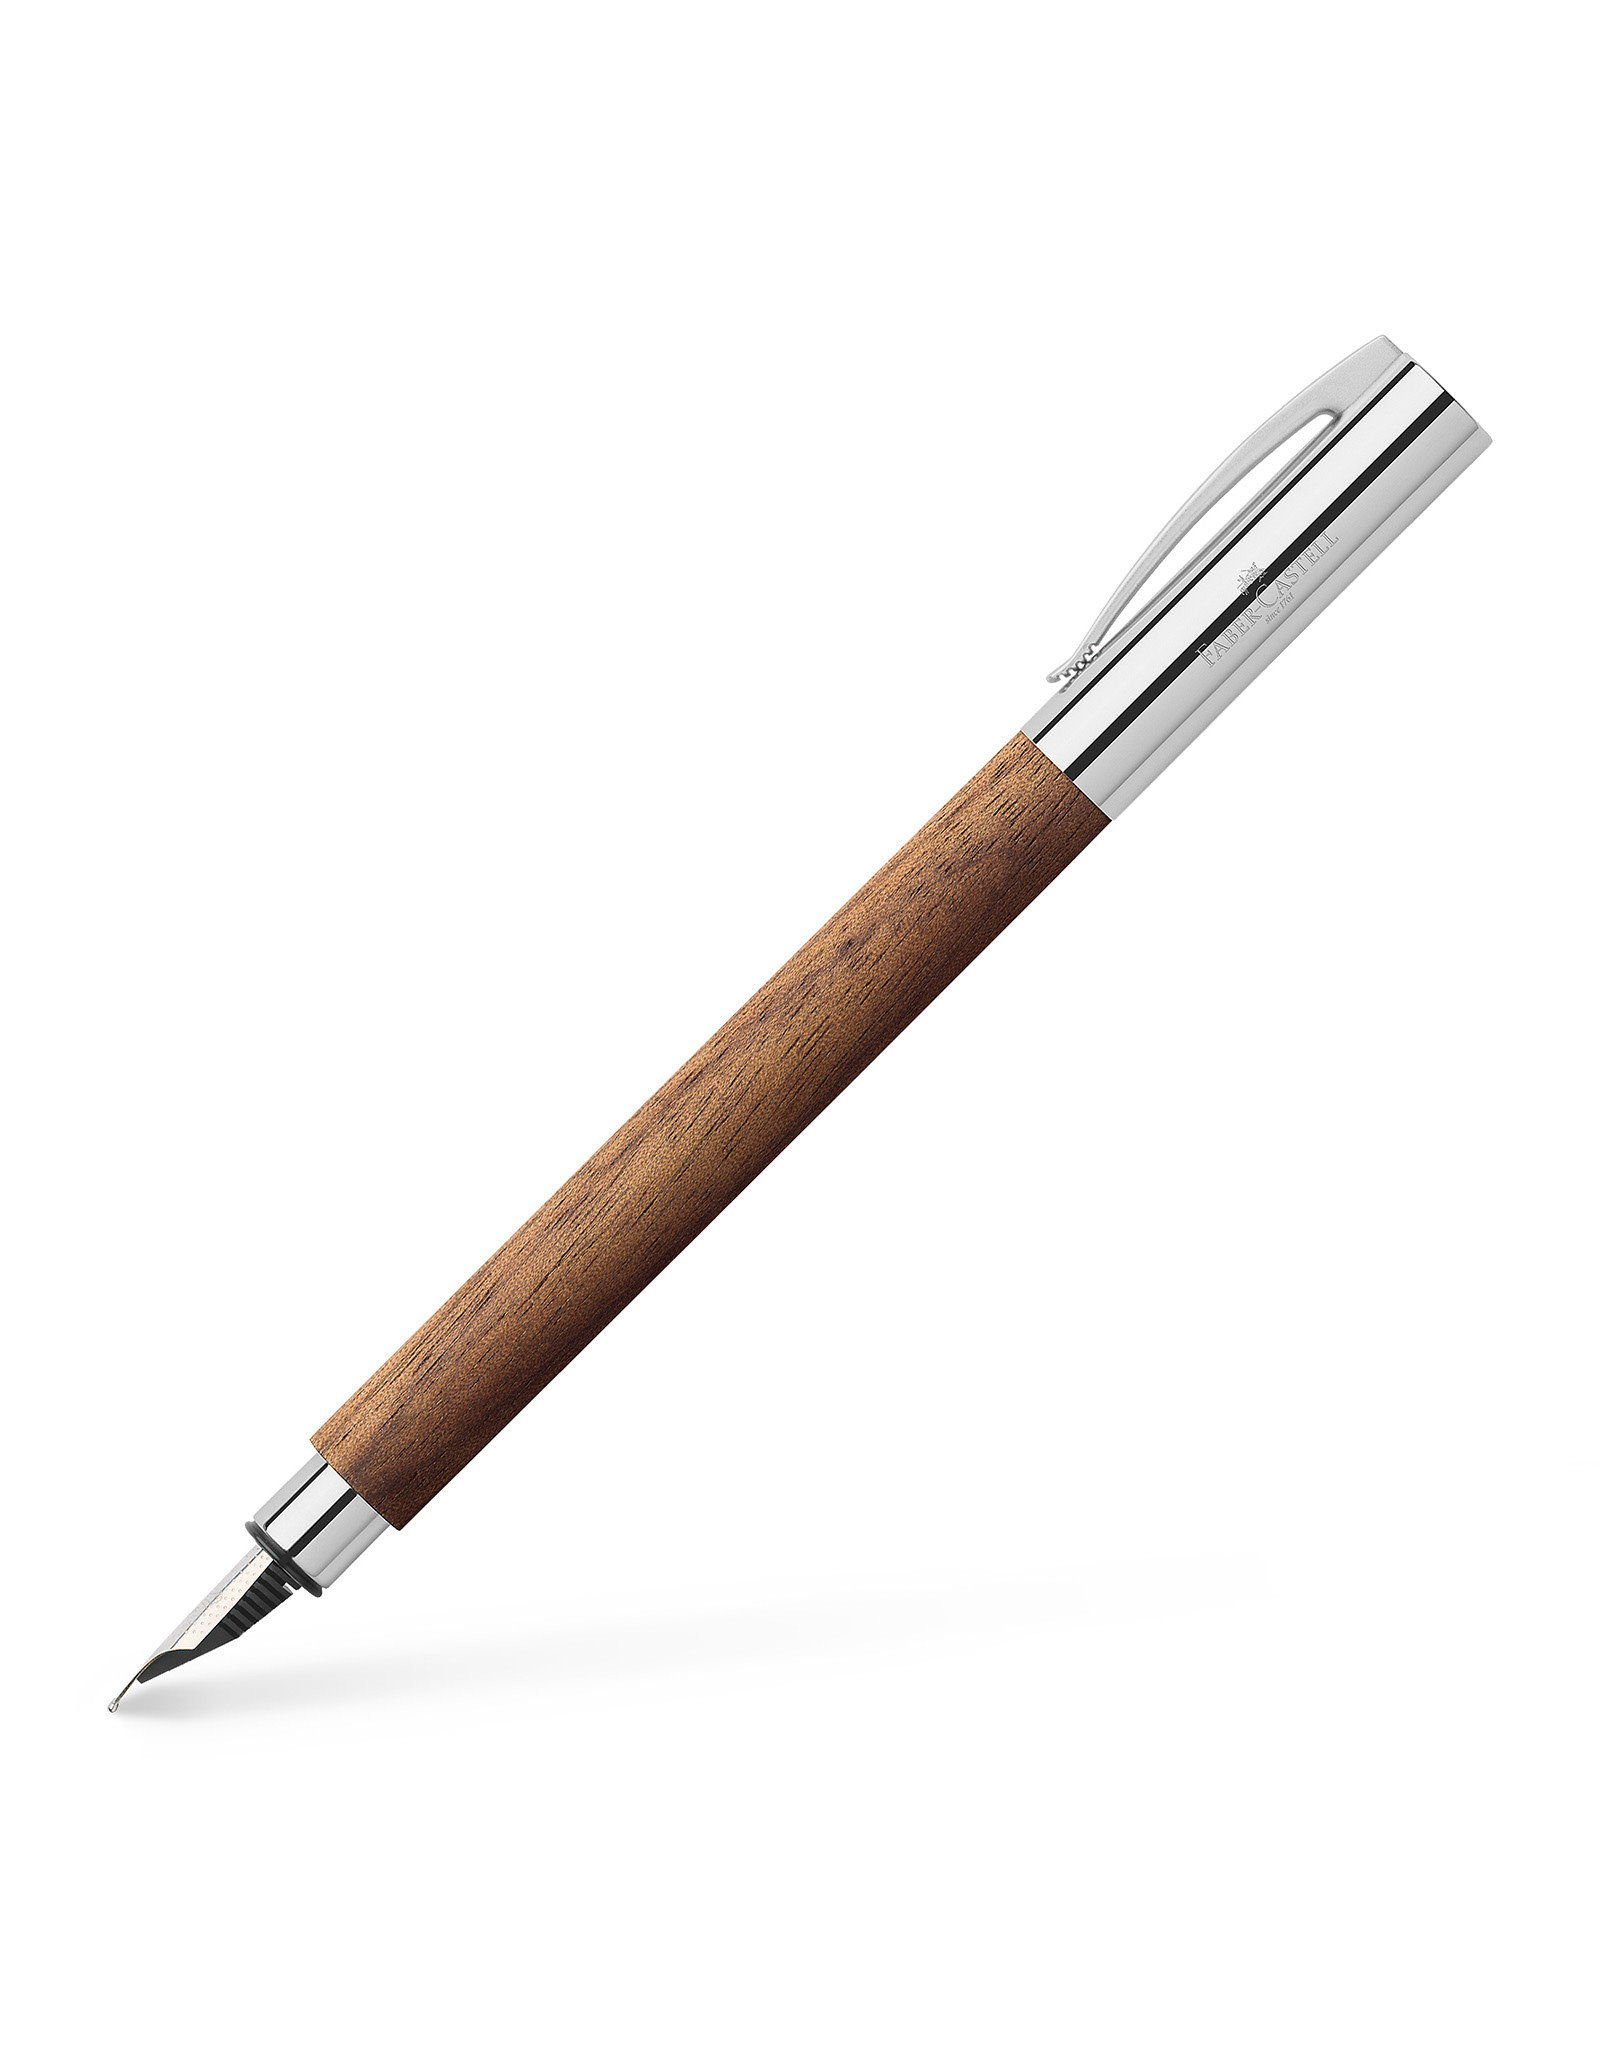 FABER-CASTELL Ambition Fountain Pen, Walnut (M)